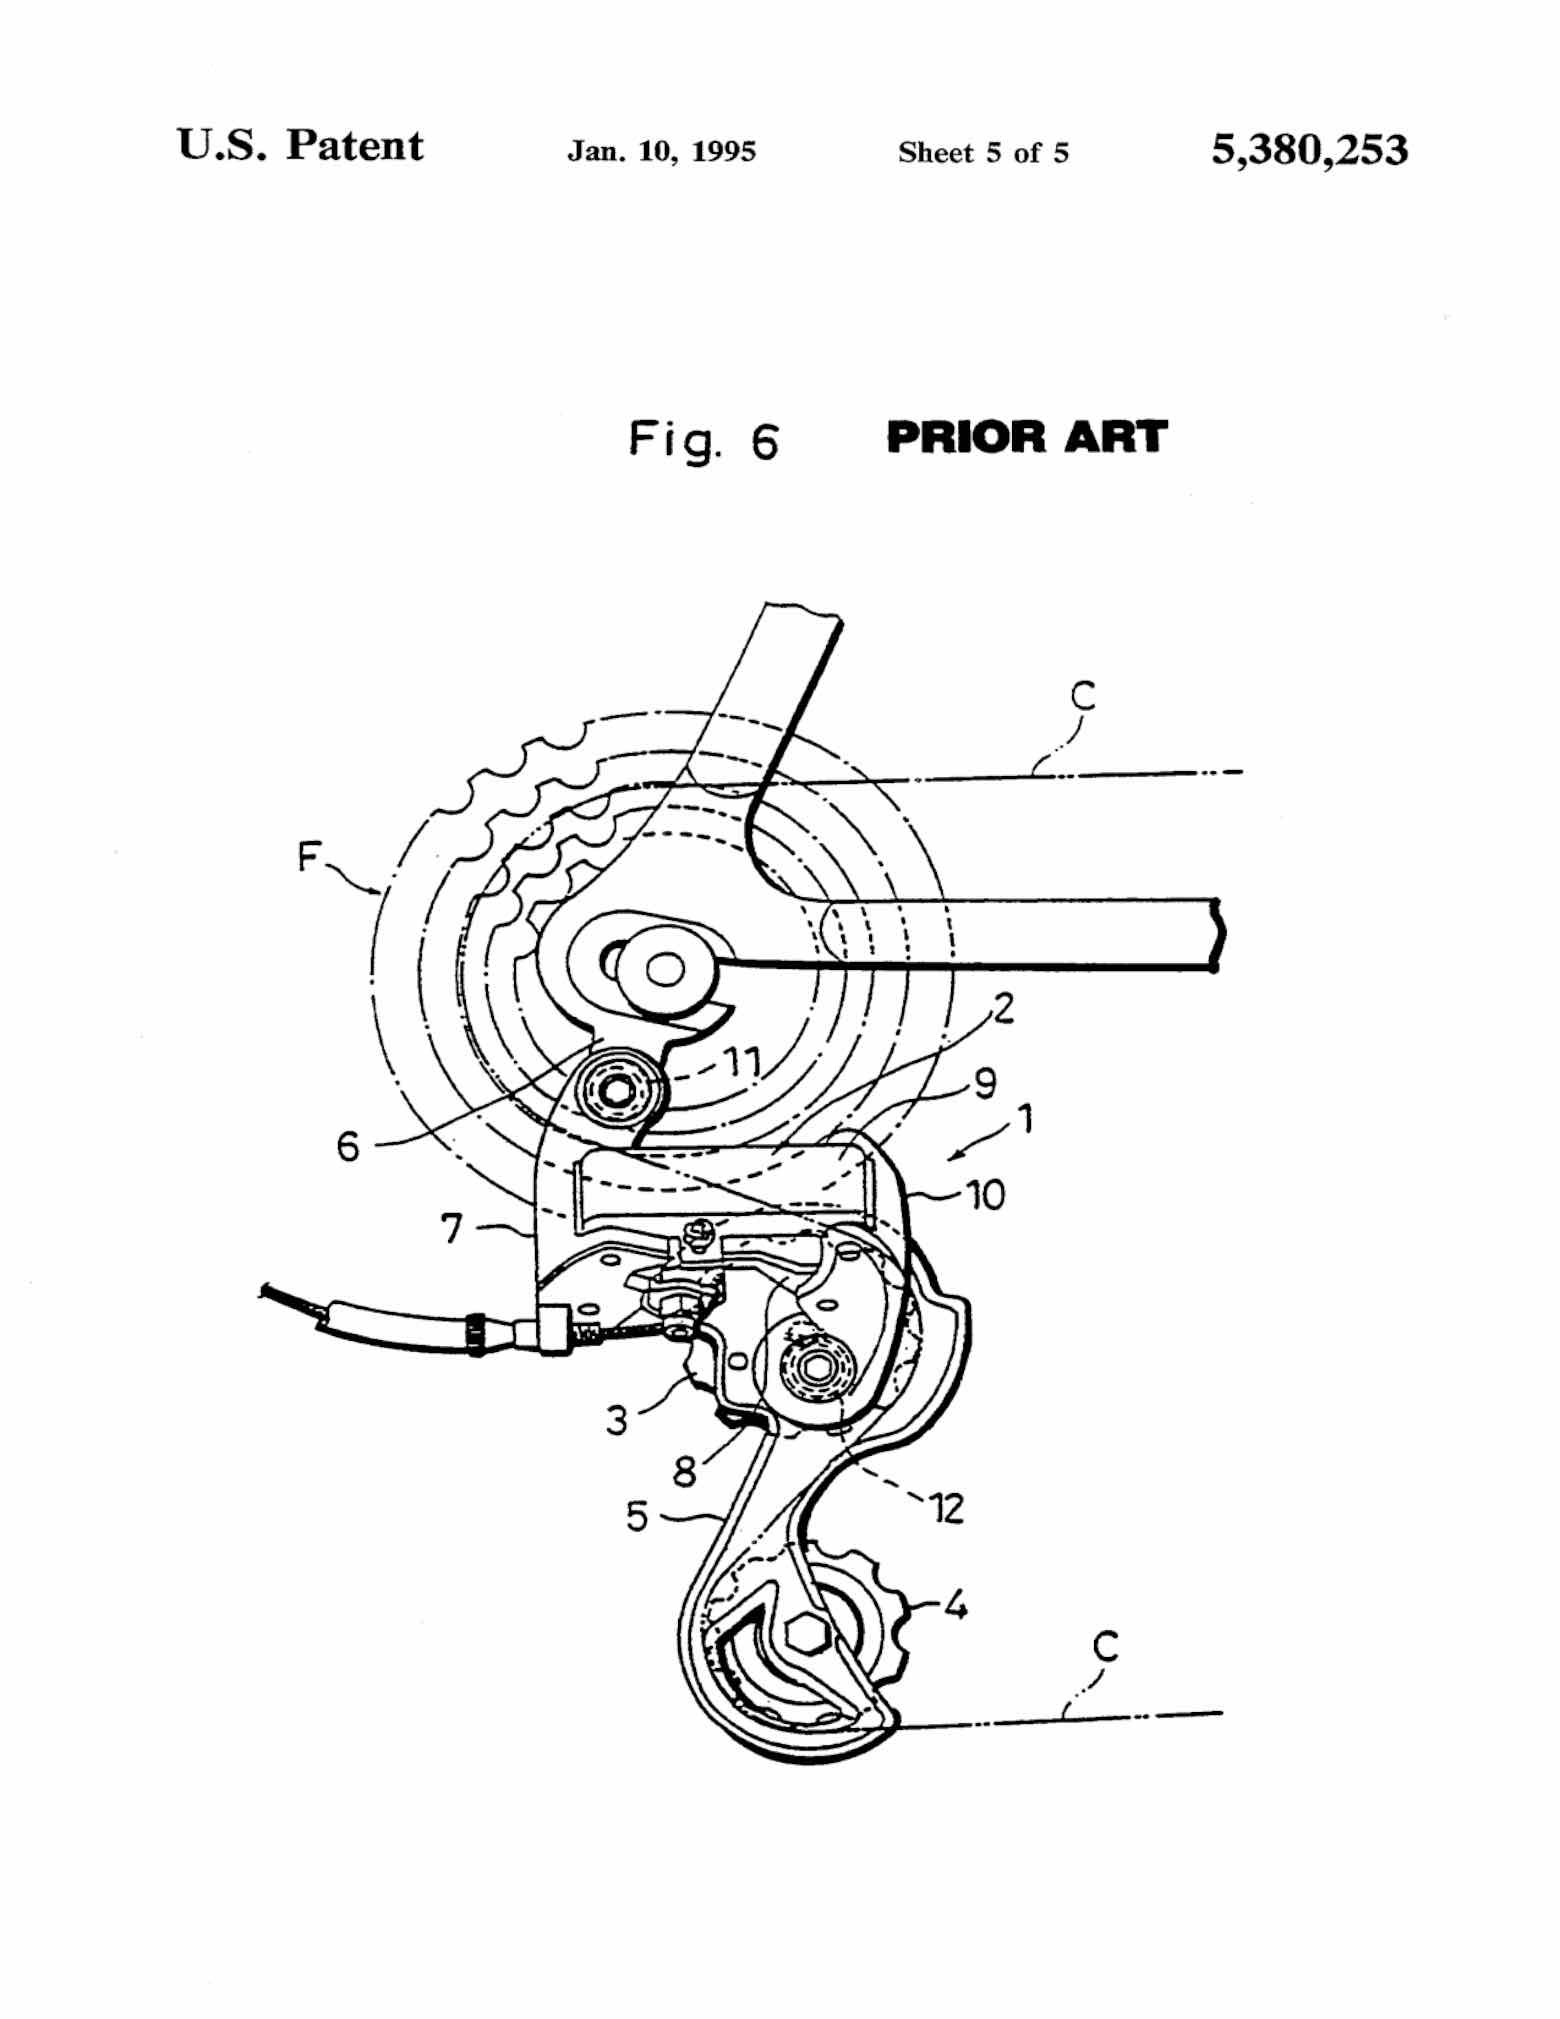 US Patent 5,380,253 - SunTour S-1 scan 11 main image